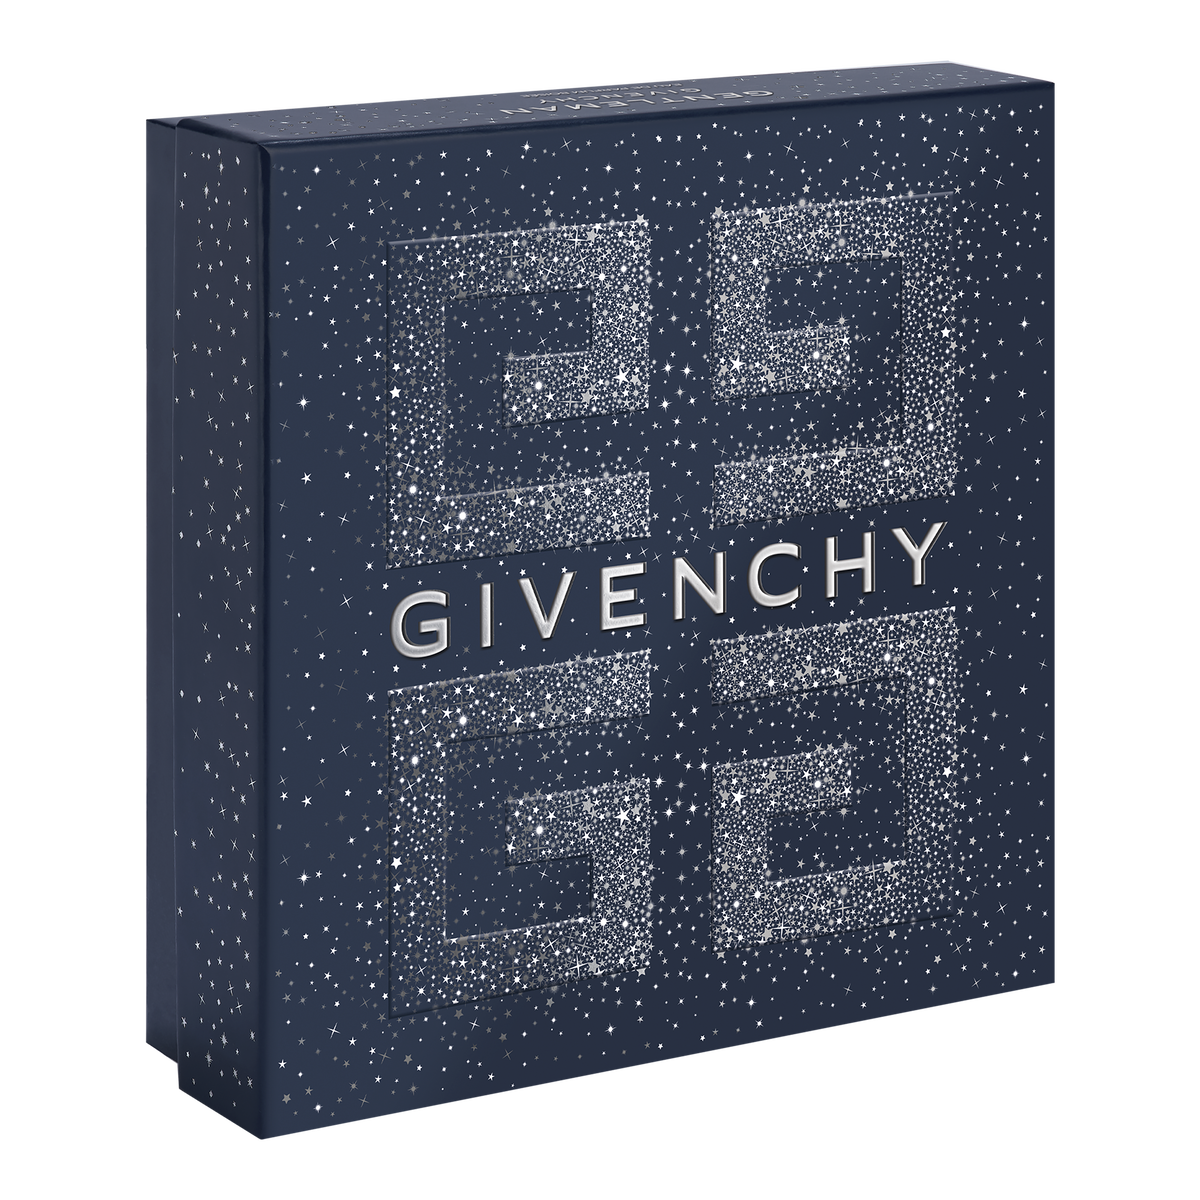 GENTLEMAN GIVENCHY - Holiday Gift Set